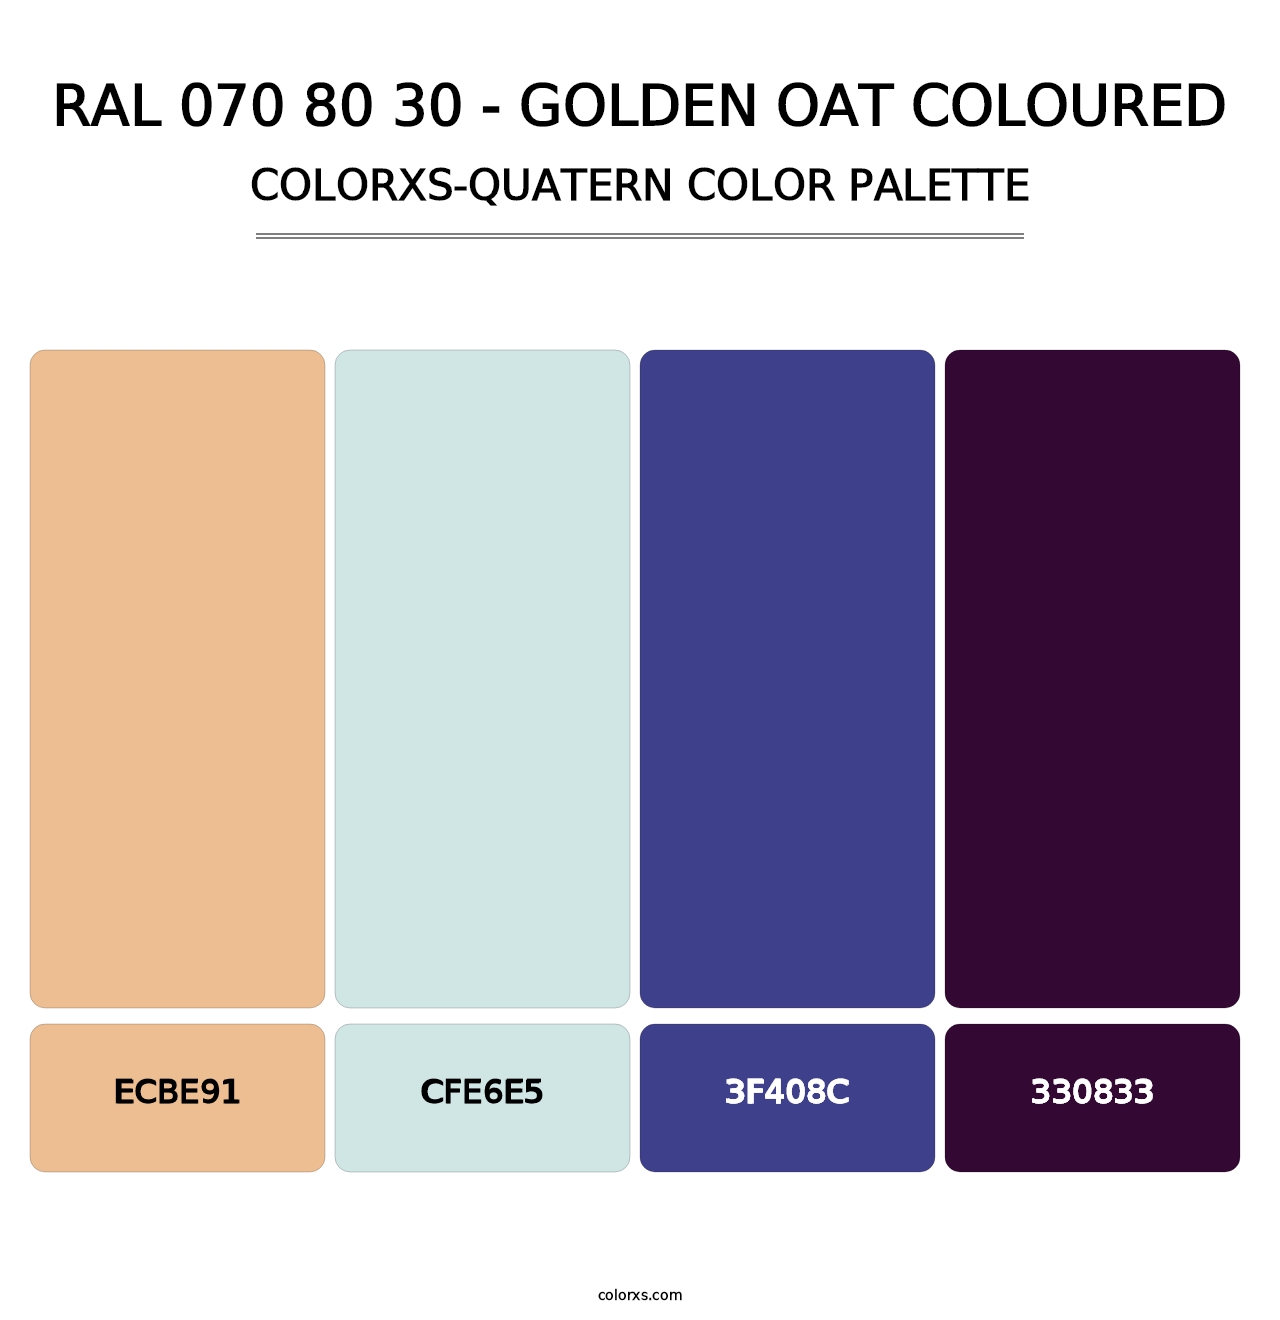 RAL 070 80 30 - Golden Oat Coloured - Colorxs Quatern Palette